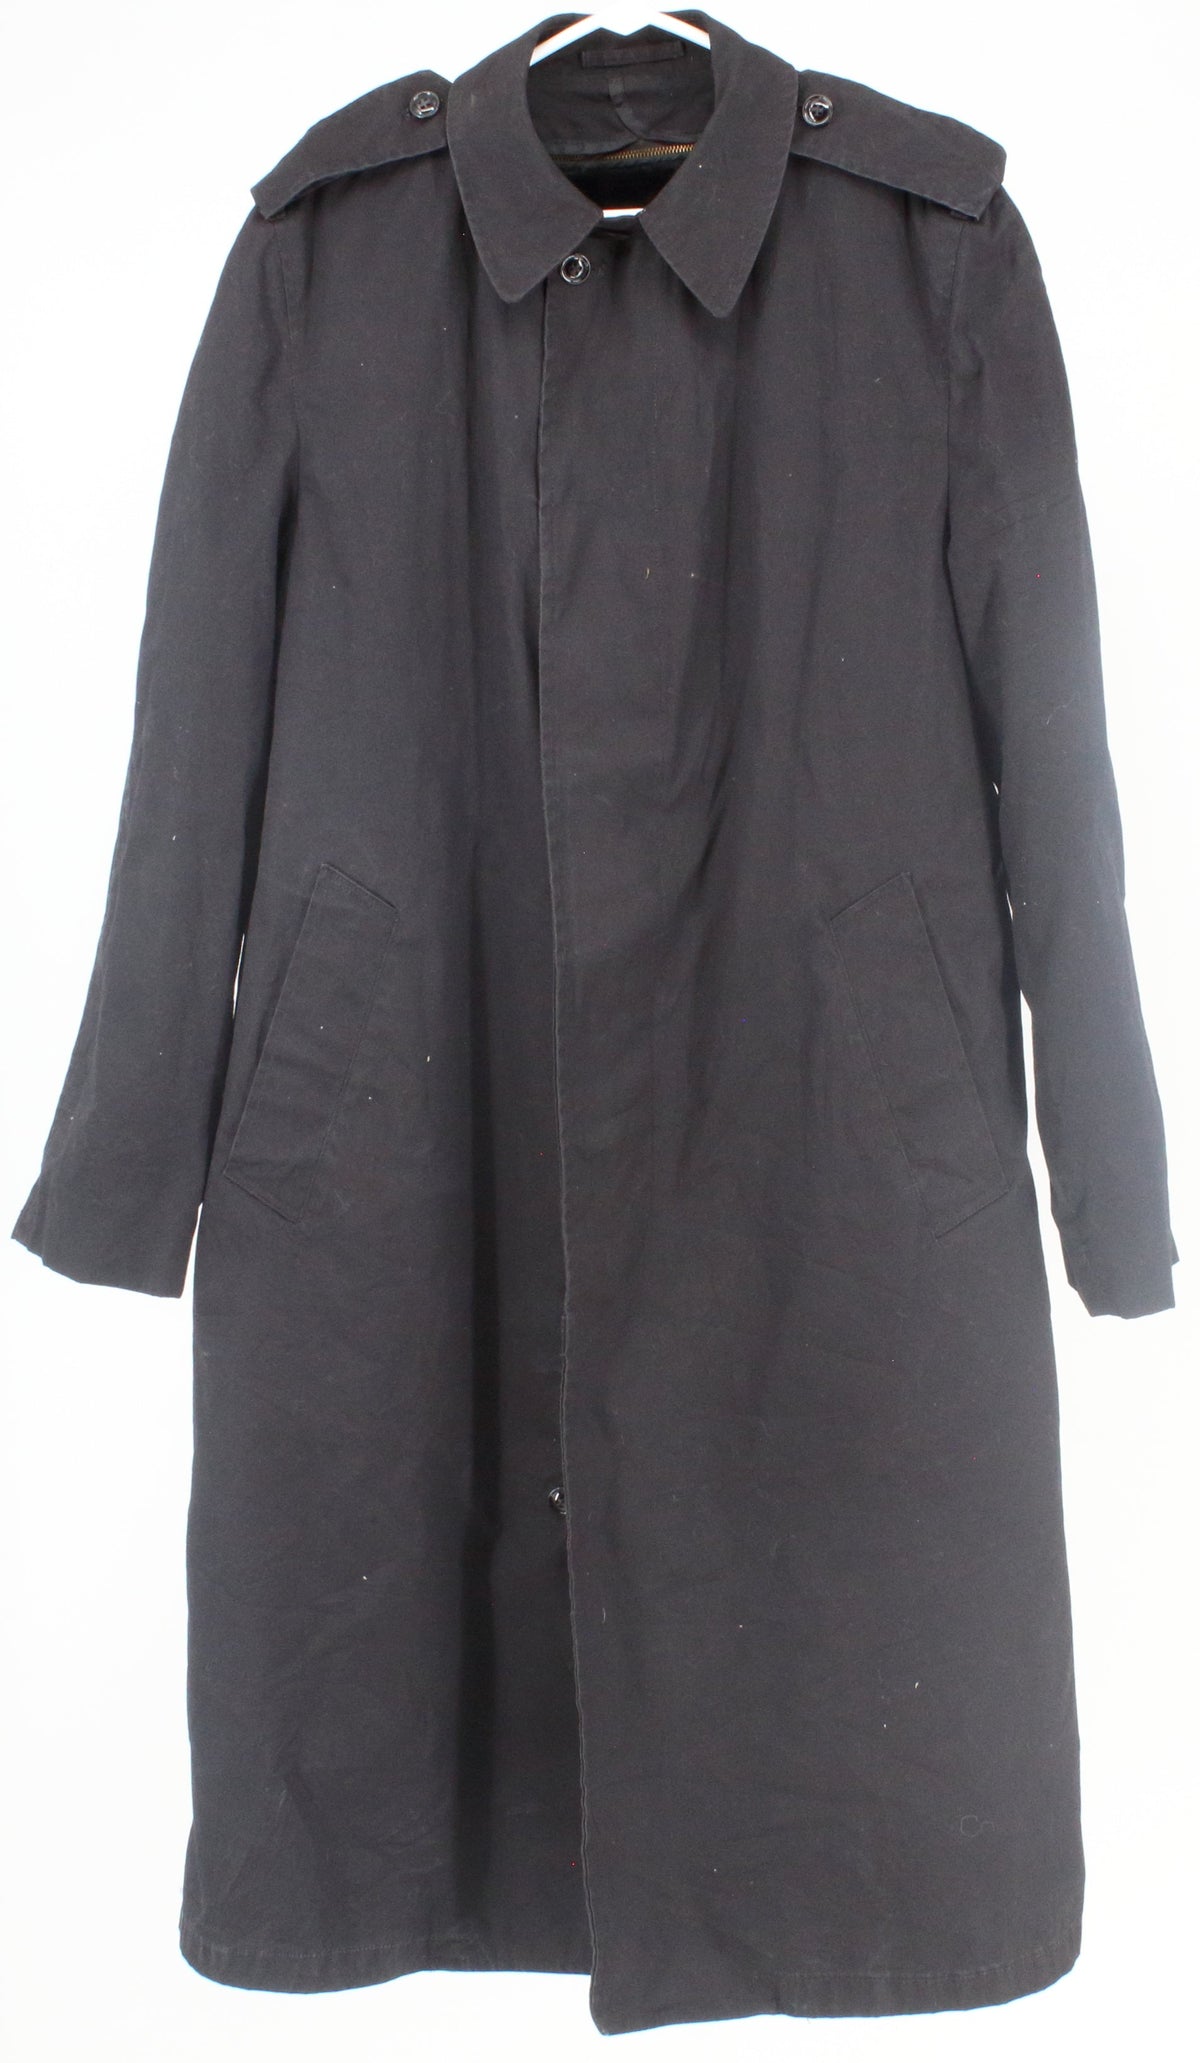 Black Long Lined Men's Coat